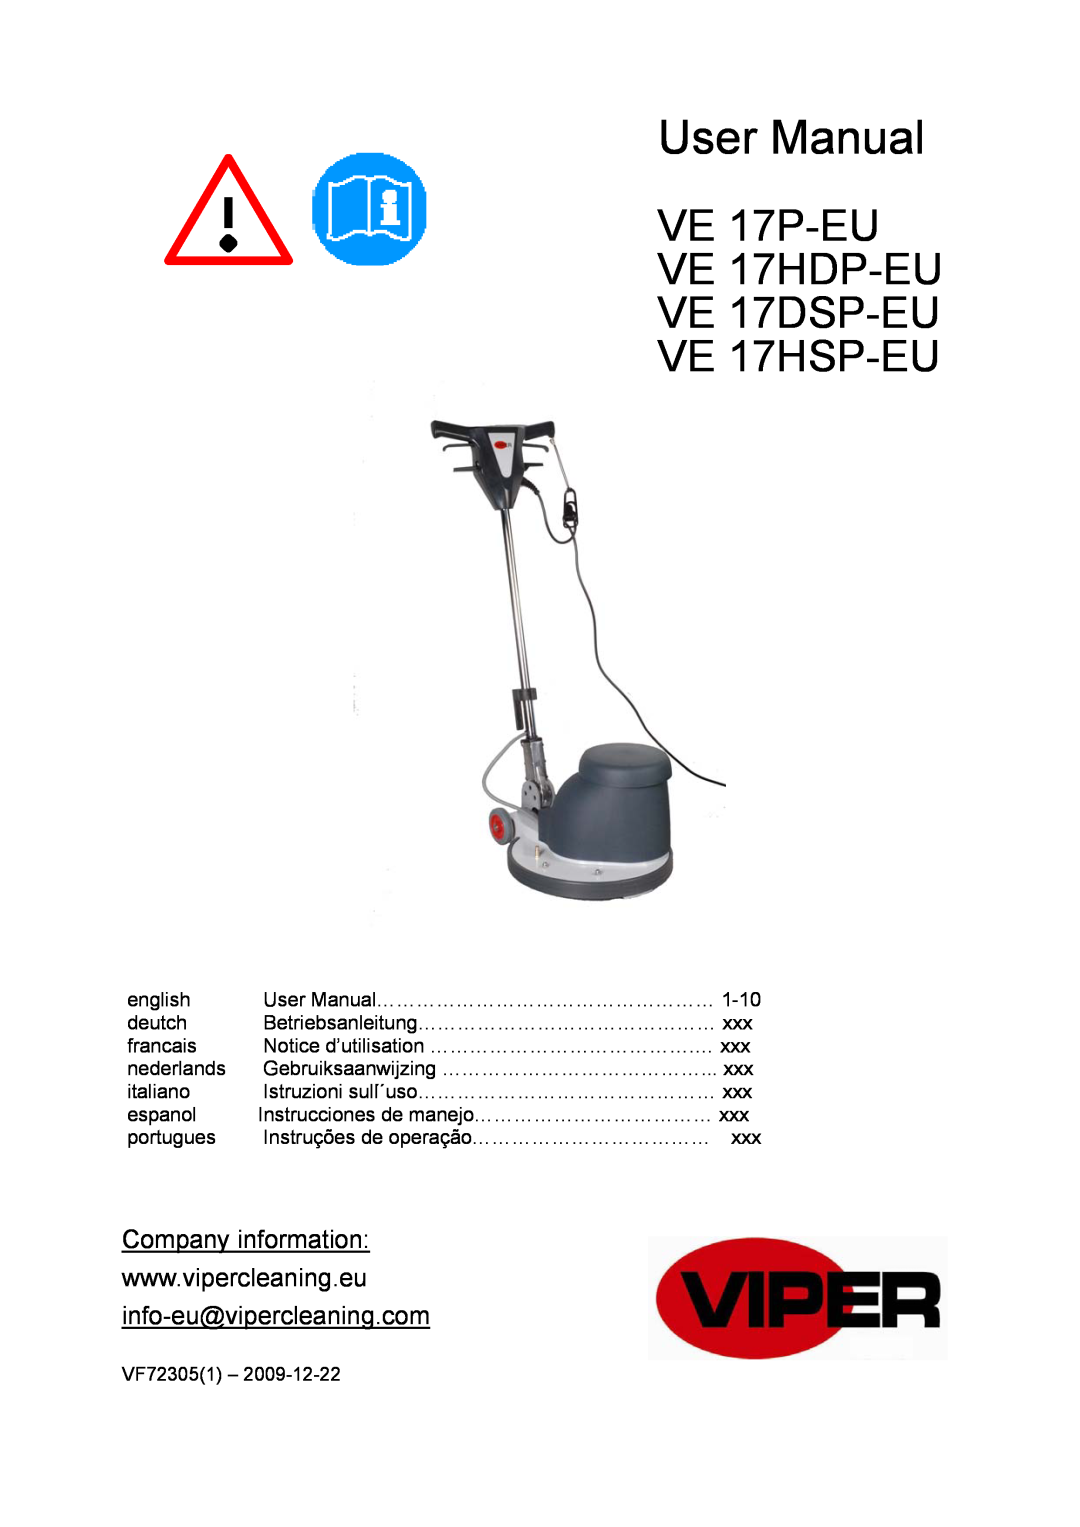 Viper user manual VE 17P-EU VE 17HDP-EU VE 17DSP-EU VE 17HSP-EU 